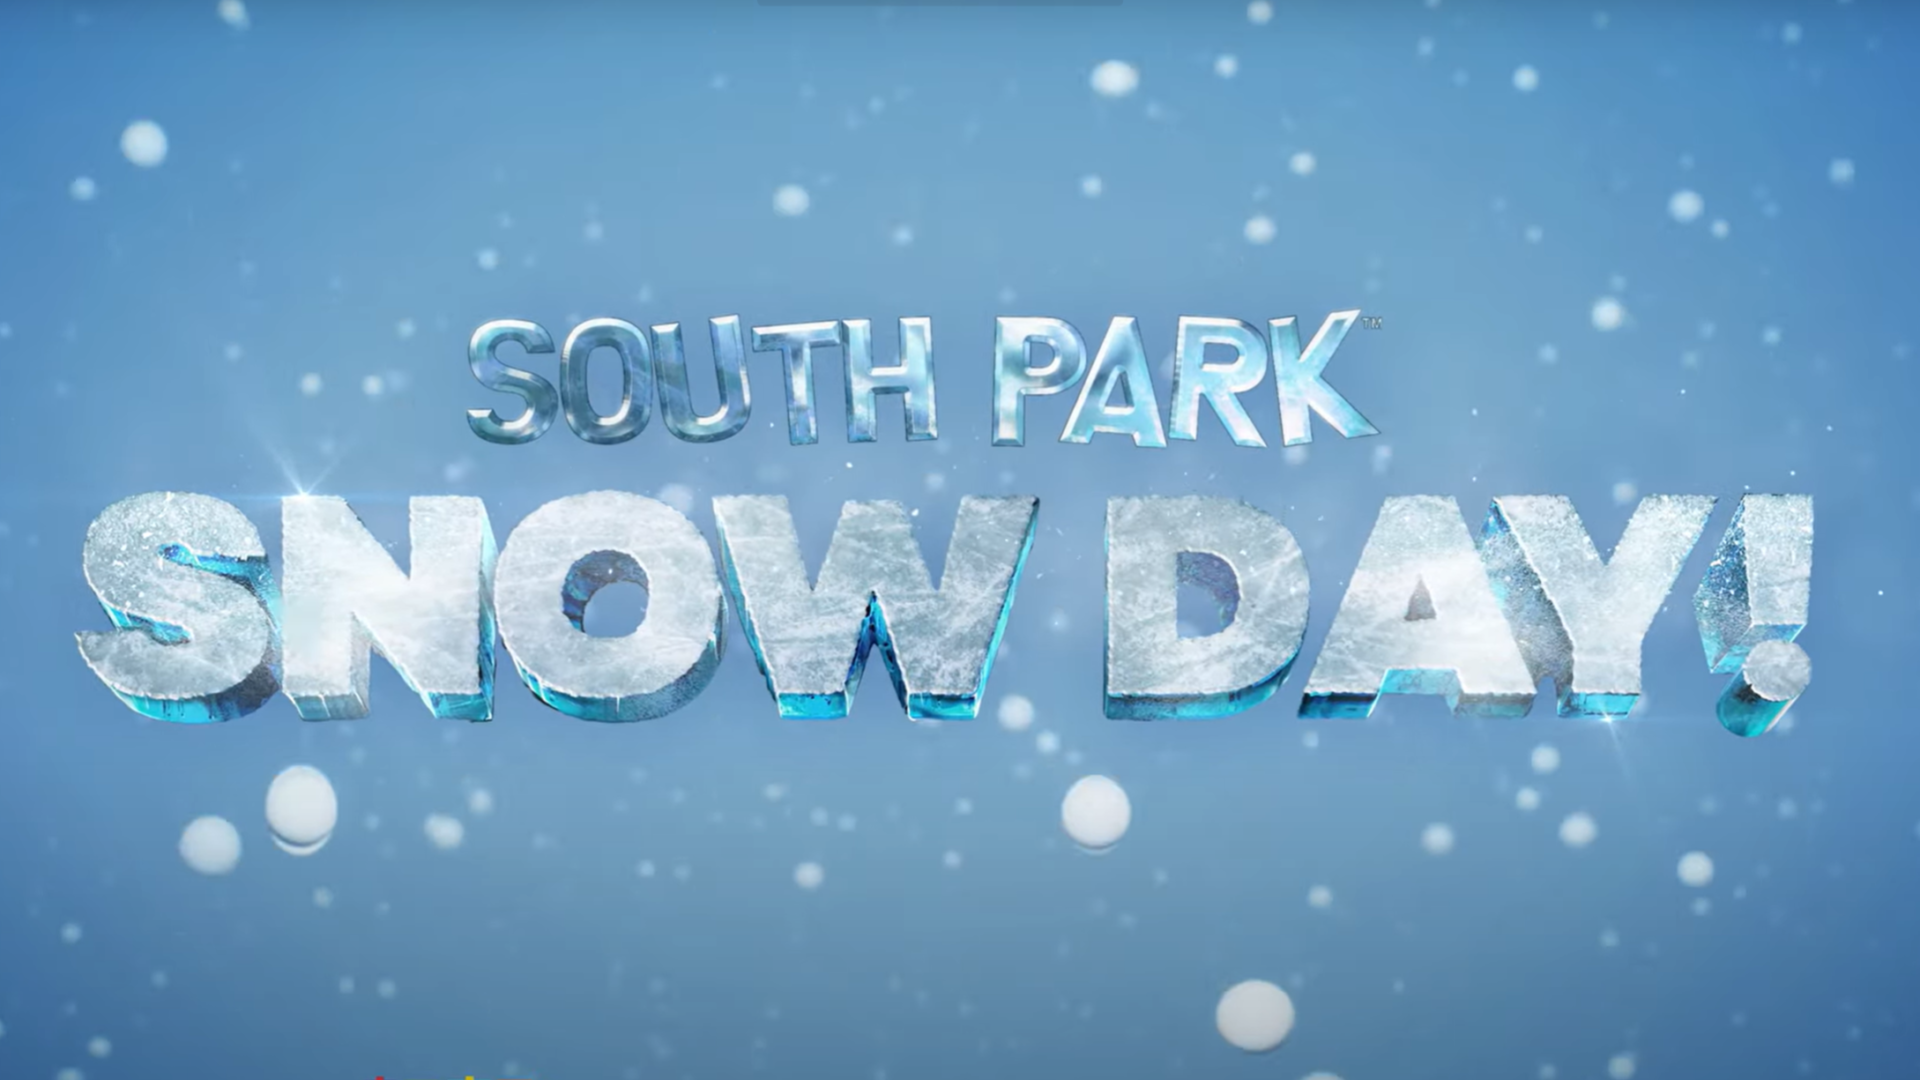 South park snow day купить. Southpark Snow Day. South Park: Snow Day!. South Park Snow Day Дата выхода.